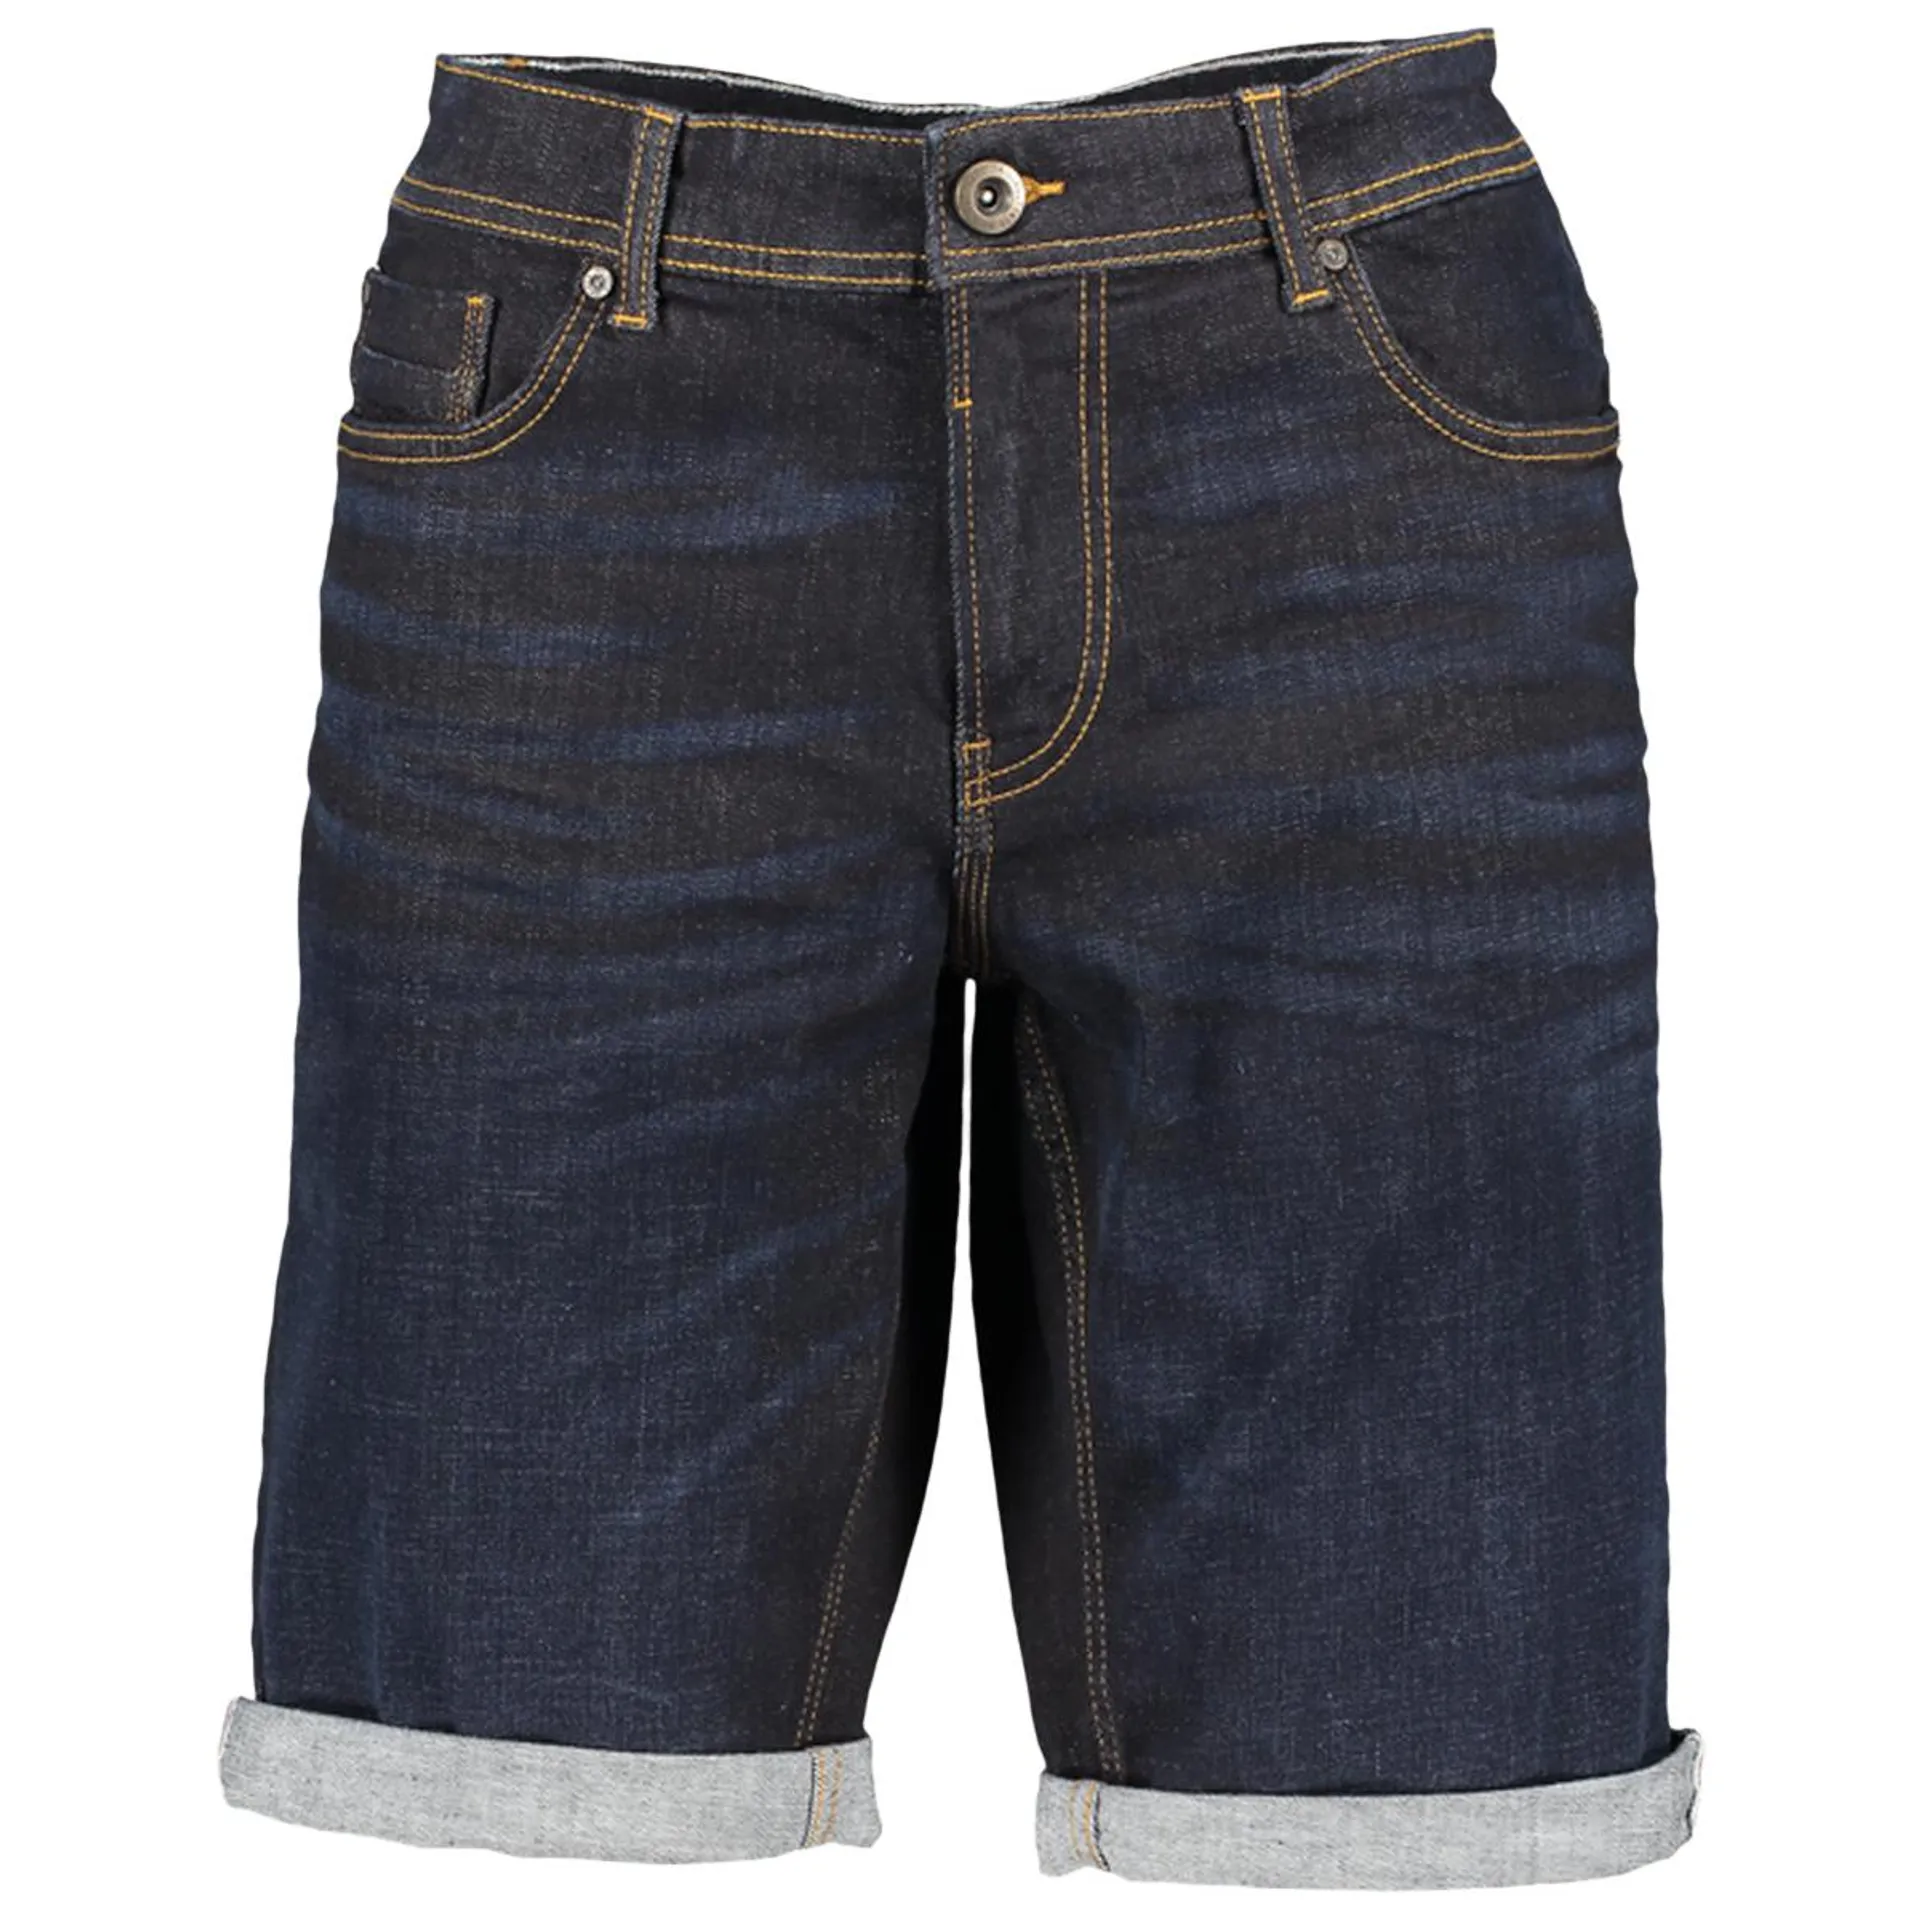 5-pocket jeans shorts